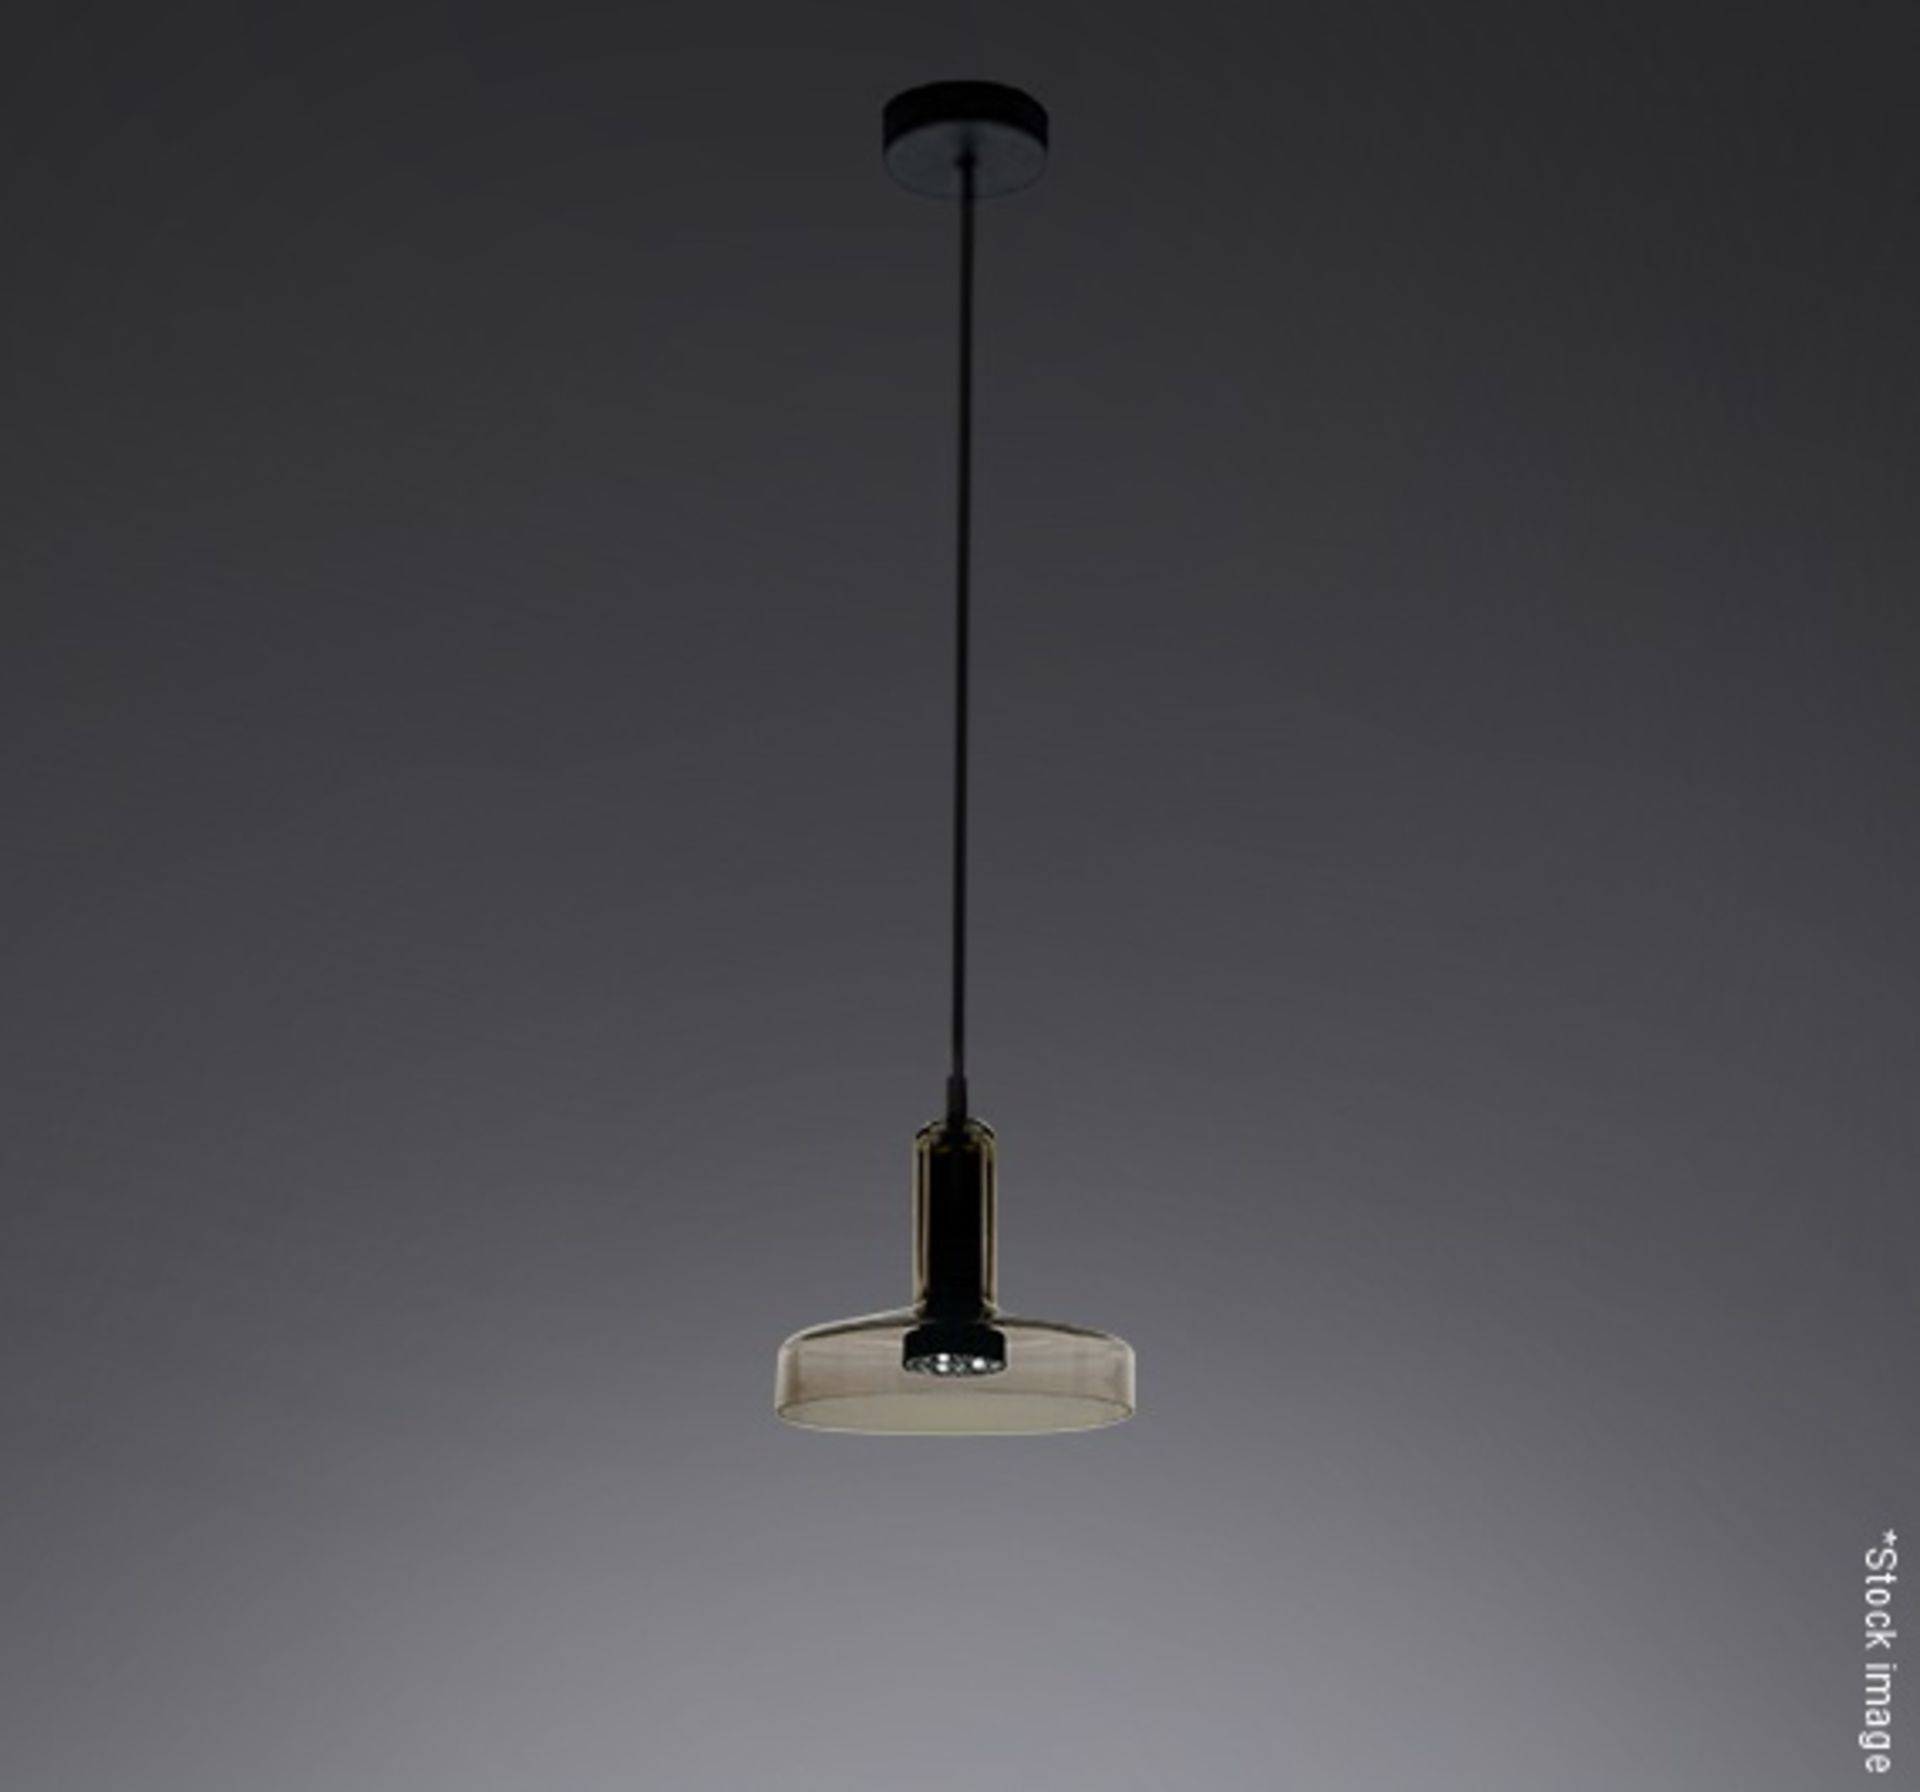 1 x ARTEMIDE Stablight "C" Designer Pendant Light Fitting With Blown Glass Diffuser - RRP £320.00